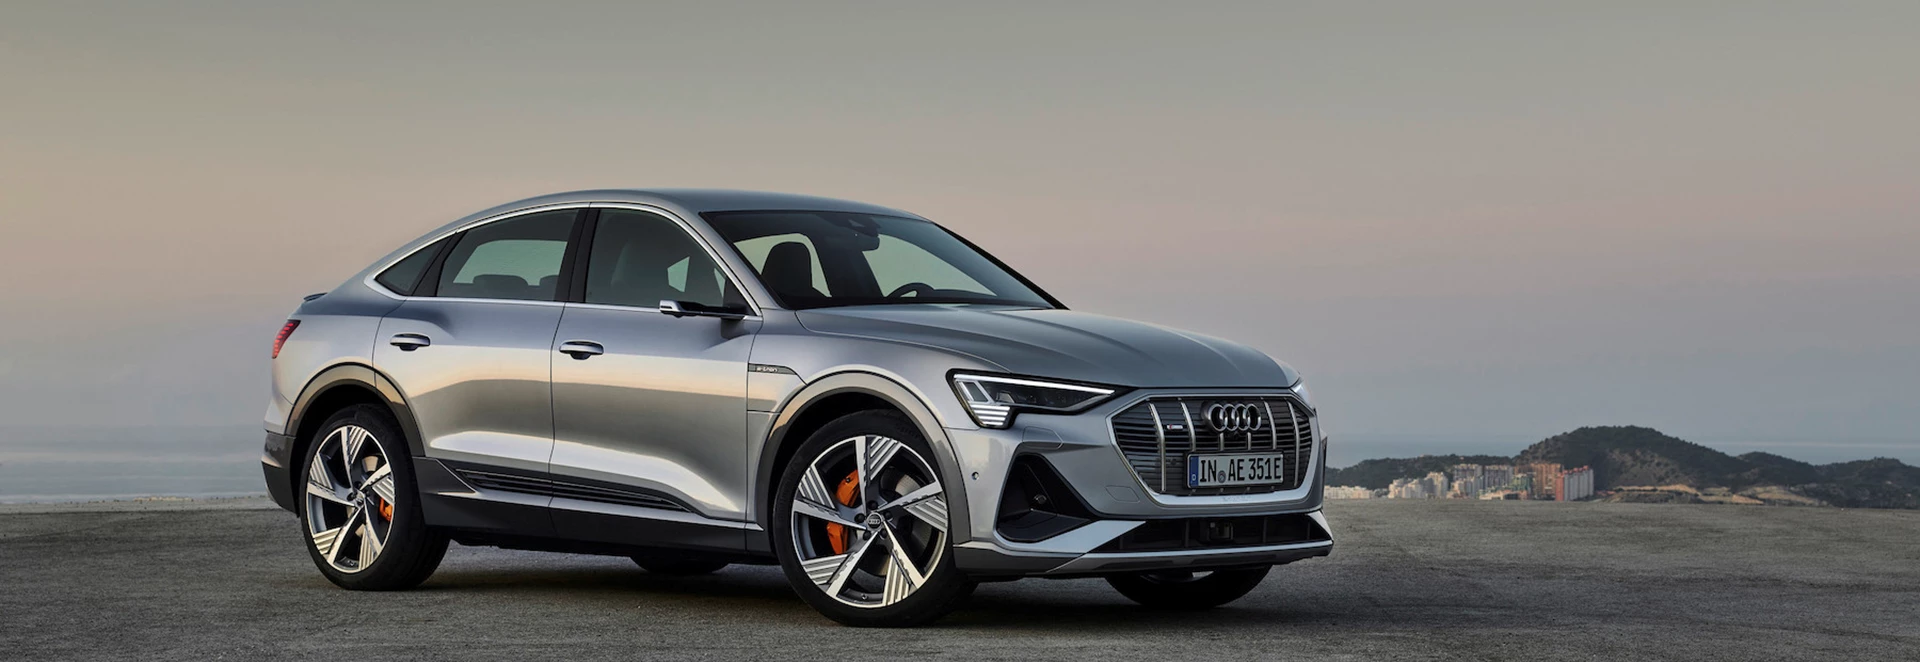 Audi expands EV line-up with new Audi e-tron Sportback